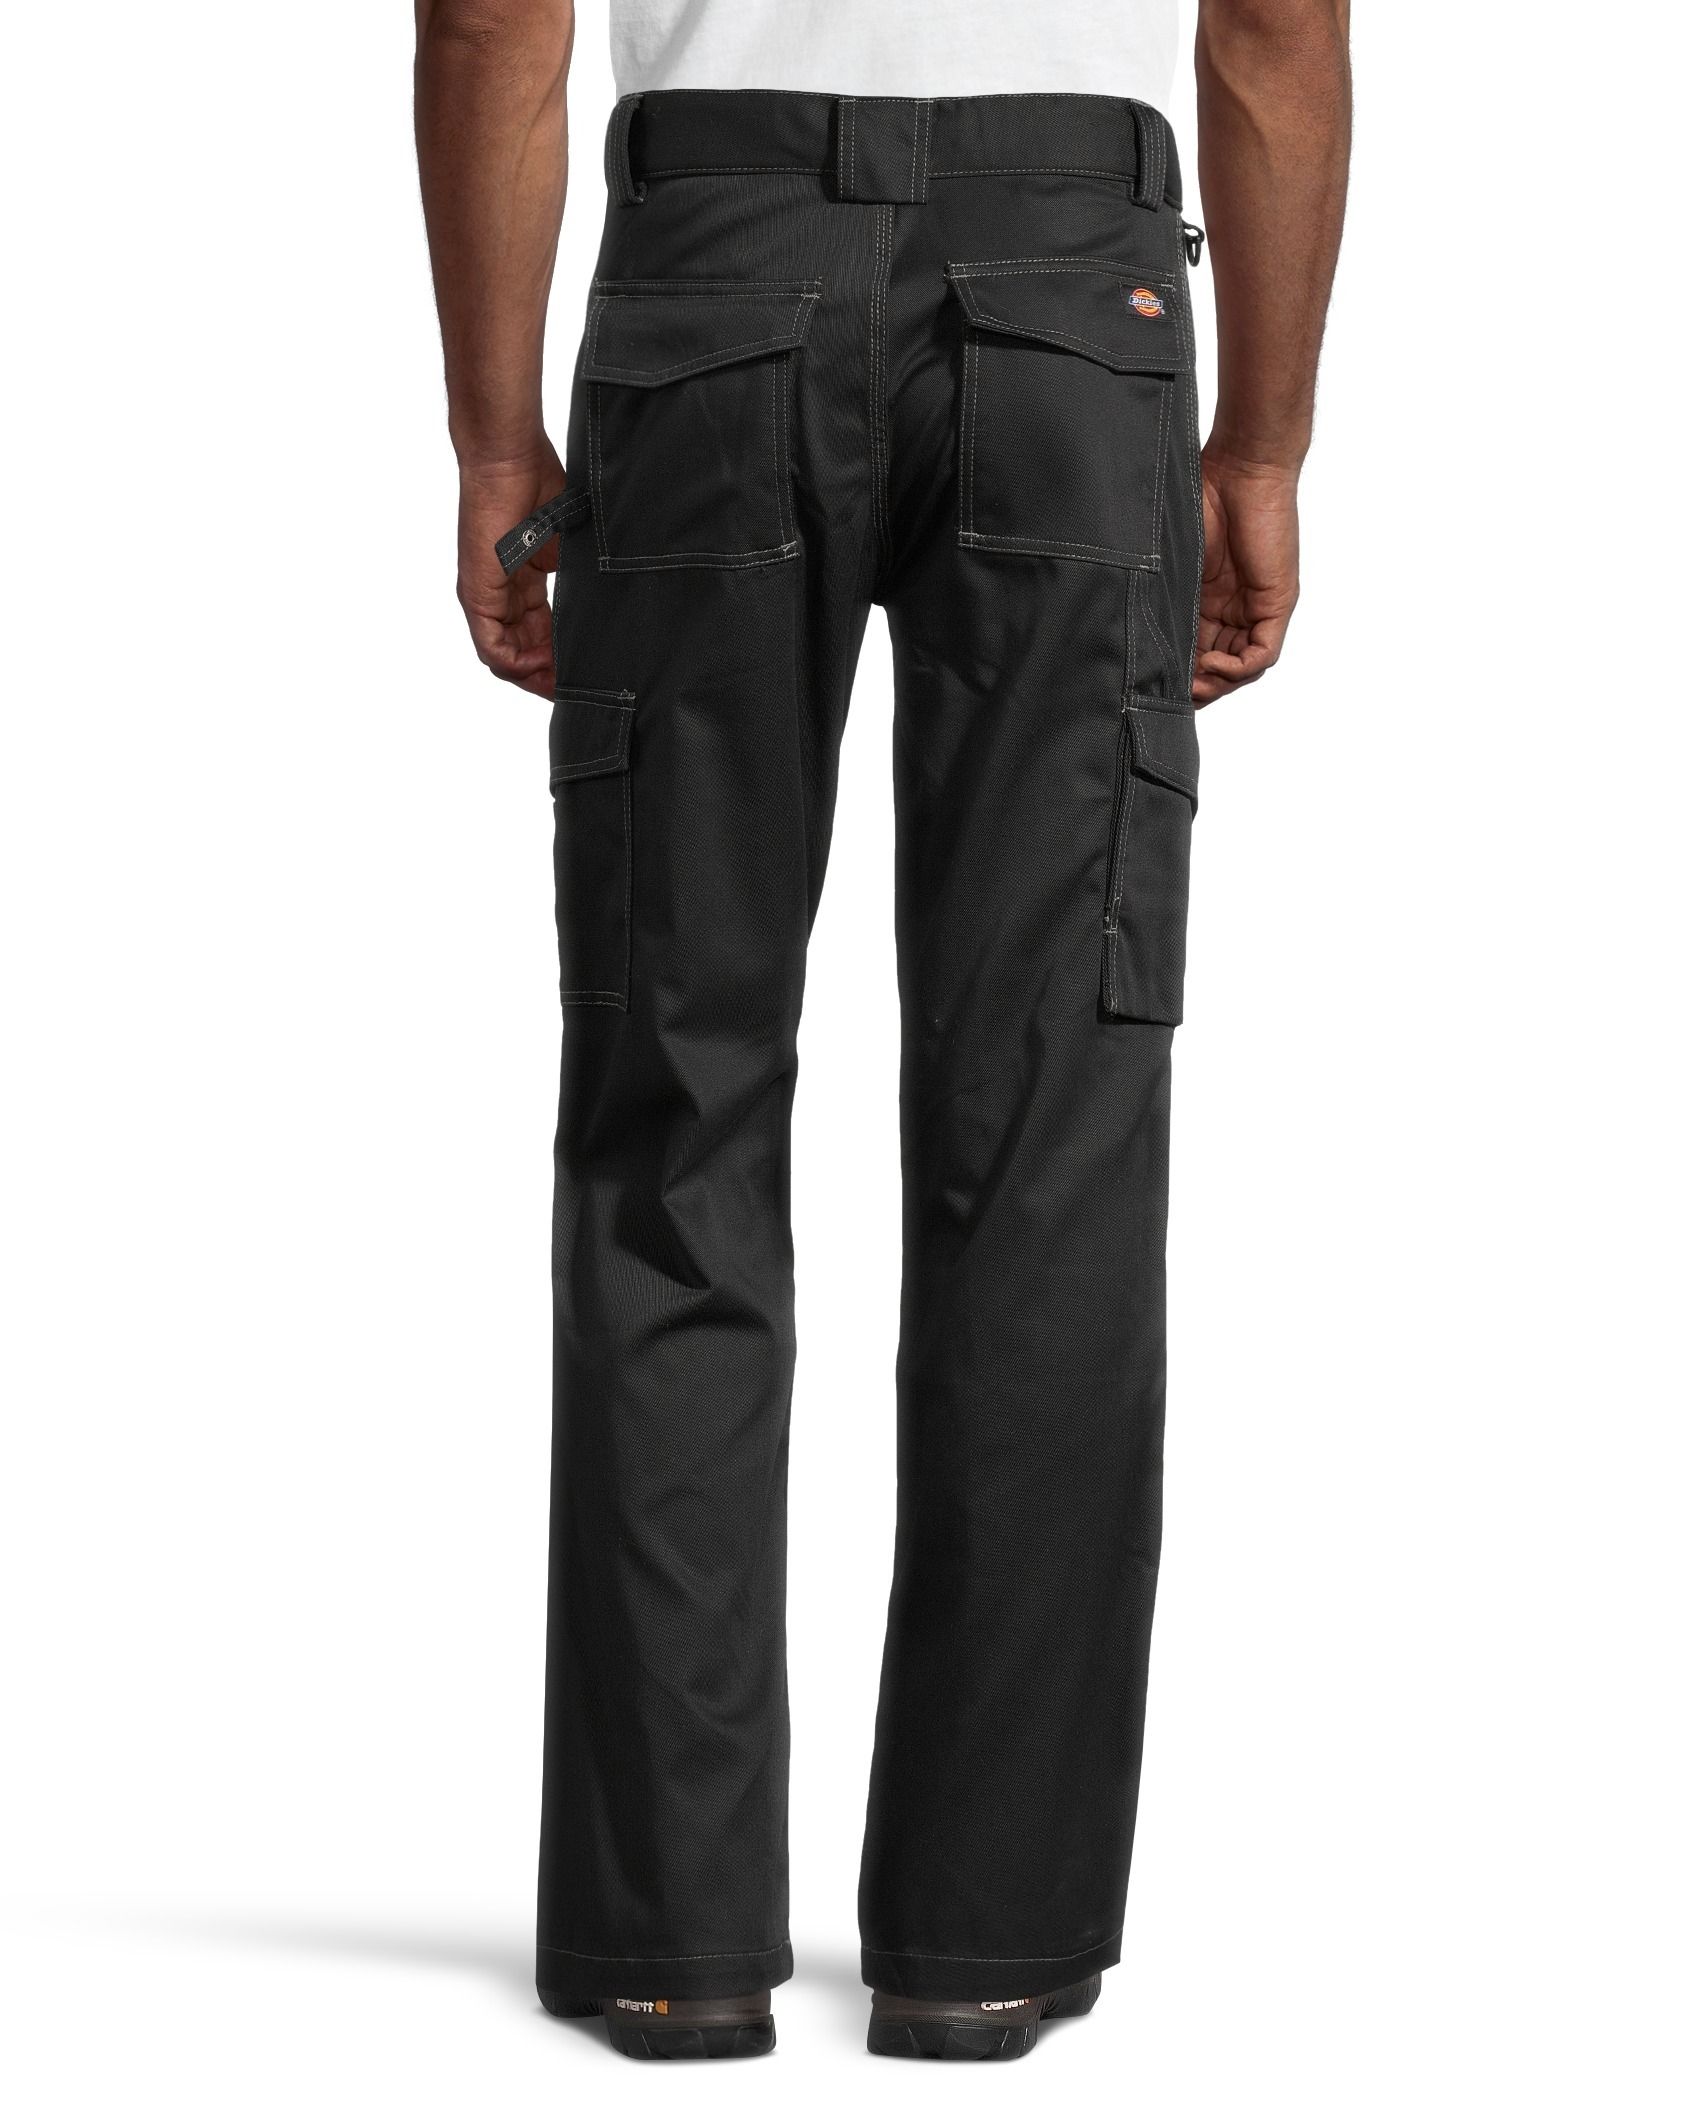 Dickies Men's Black Twill Work Pants (33 X 30) at